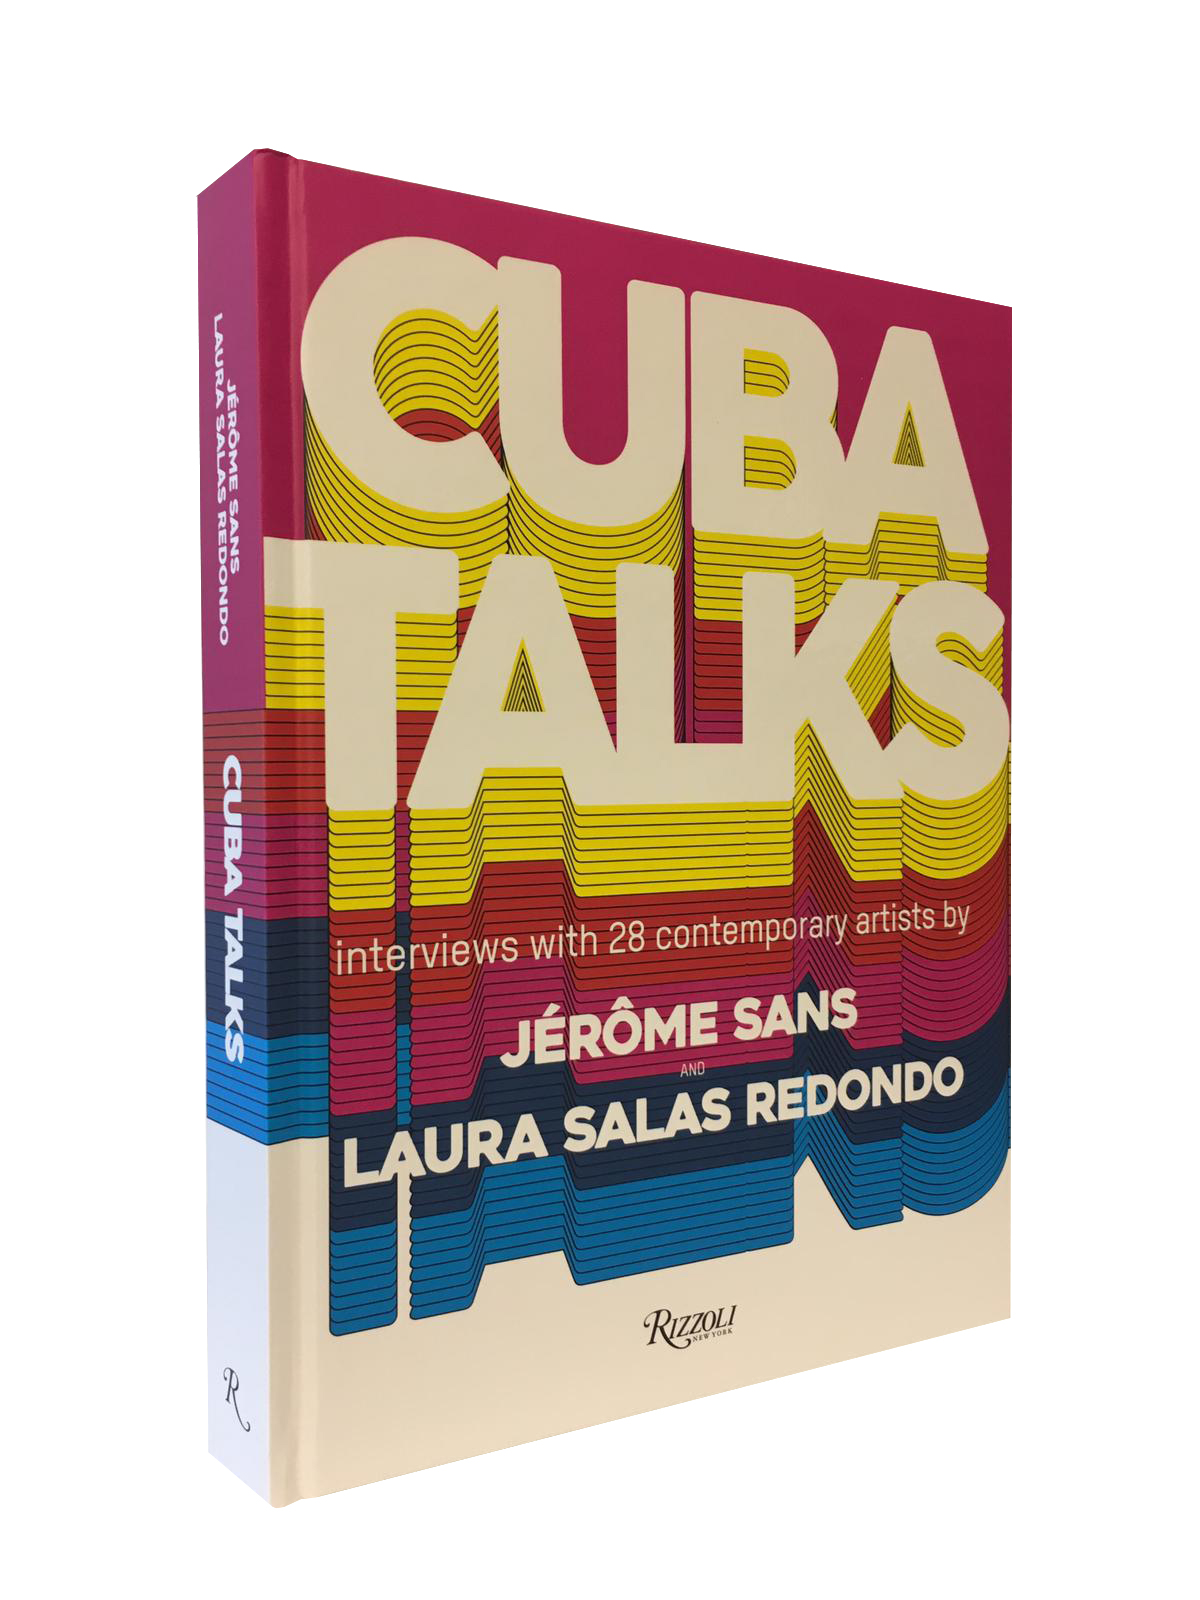 Galleria Continua - CUBA TALKS. interviews with 28 contemporary artists